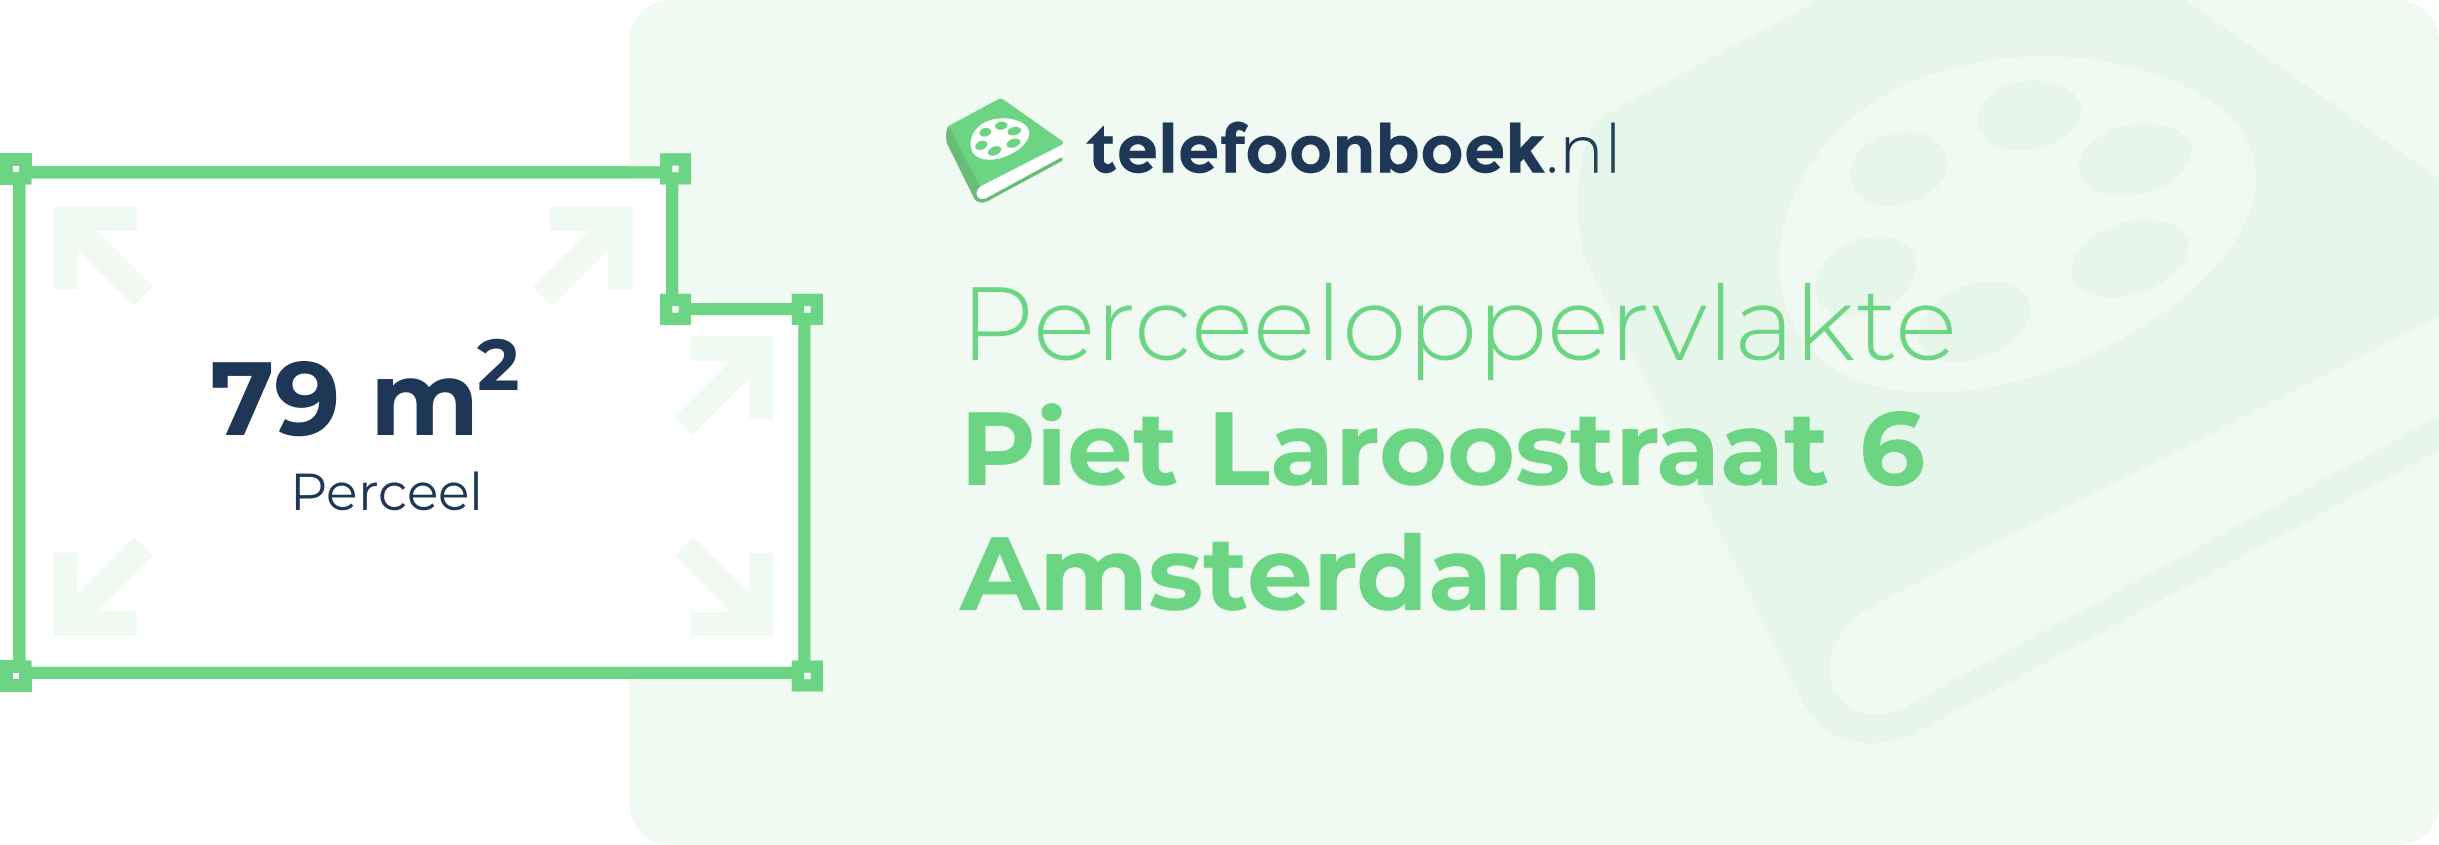 Perceeloppervlakte Piet Laroostraat 6 Amsterdam